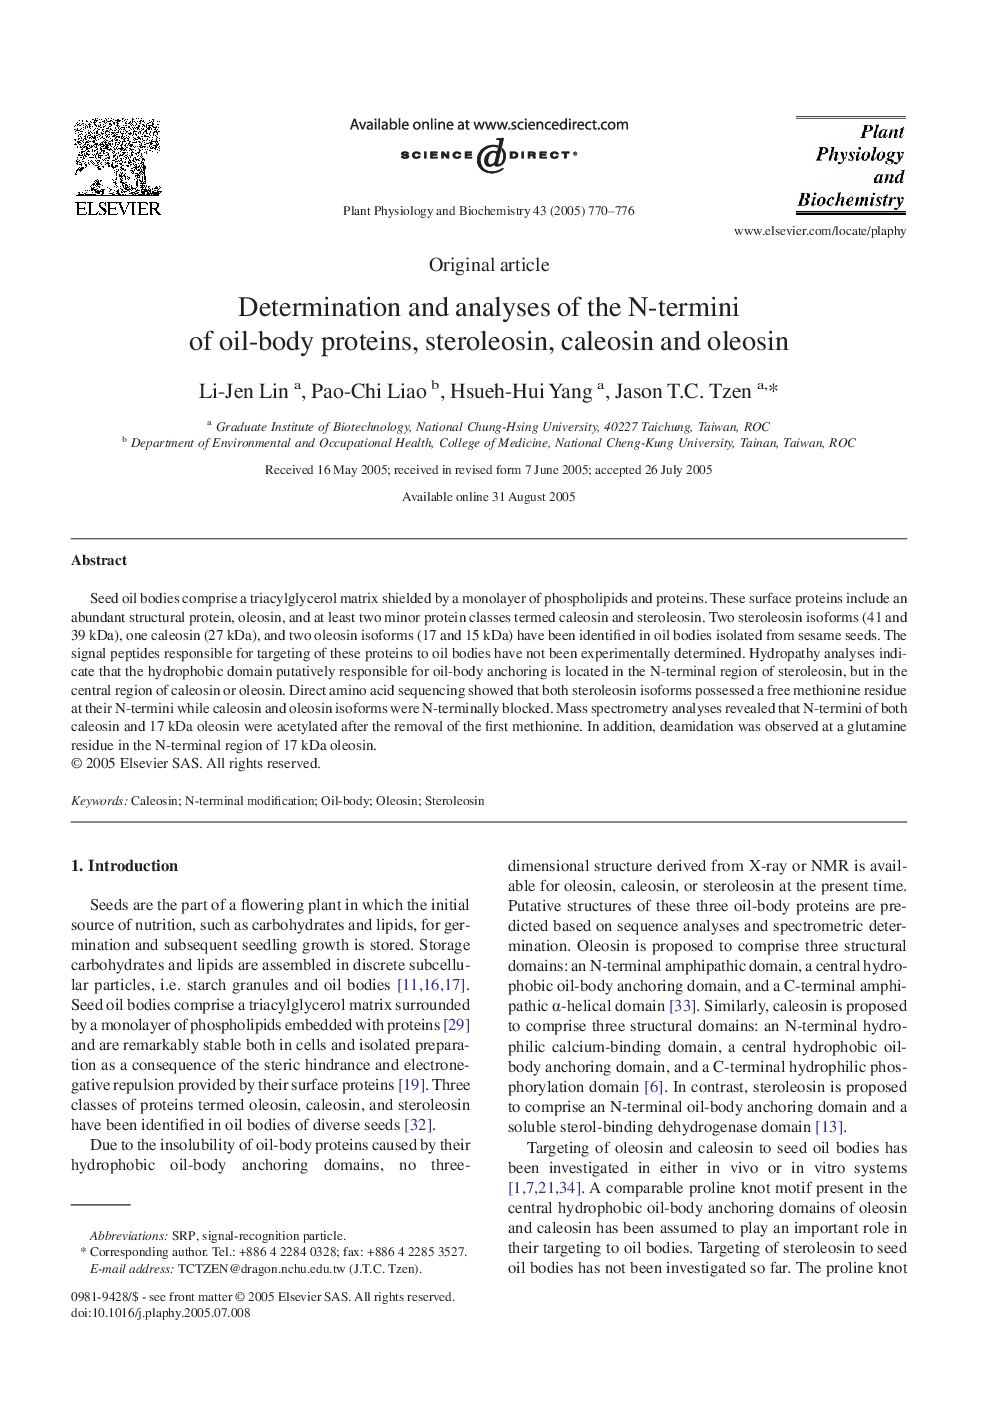 Determination and analyses of the N-termini of oil-body proteins, steroleosin, caleosin and oleosin